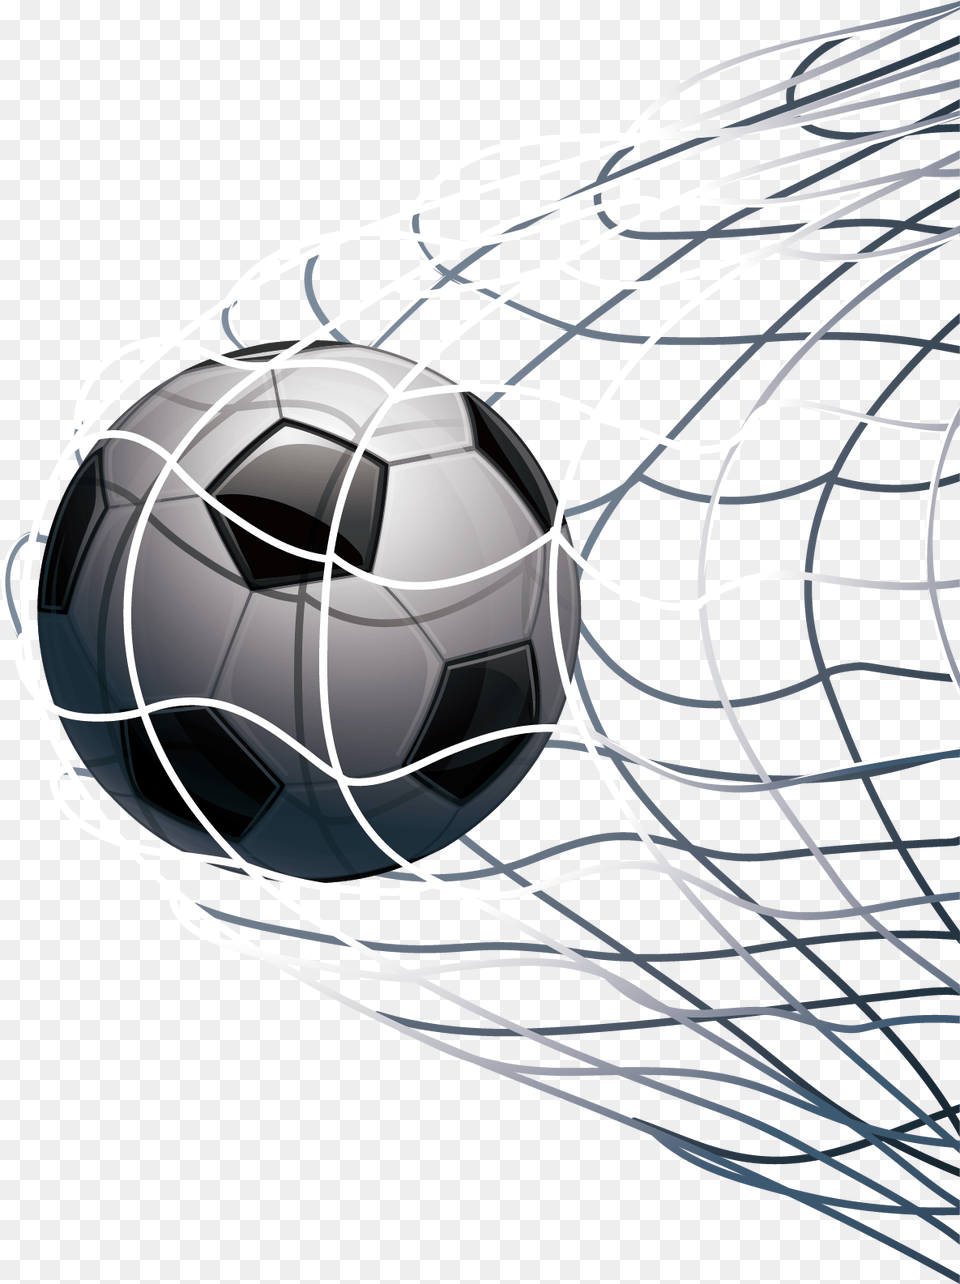 Download Vector Futsal Soccer Football Goal Hd Image Soccer Transparent Background Goal, Ball, Soccer Ball, Sphere, Sport Png